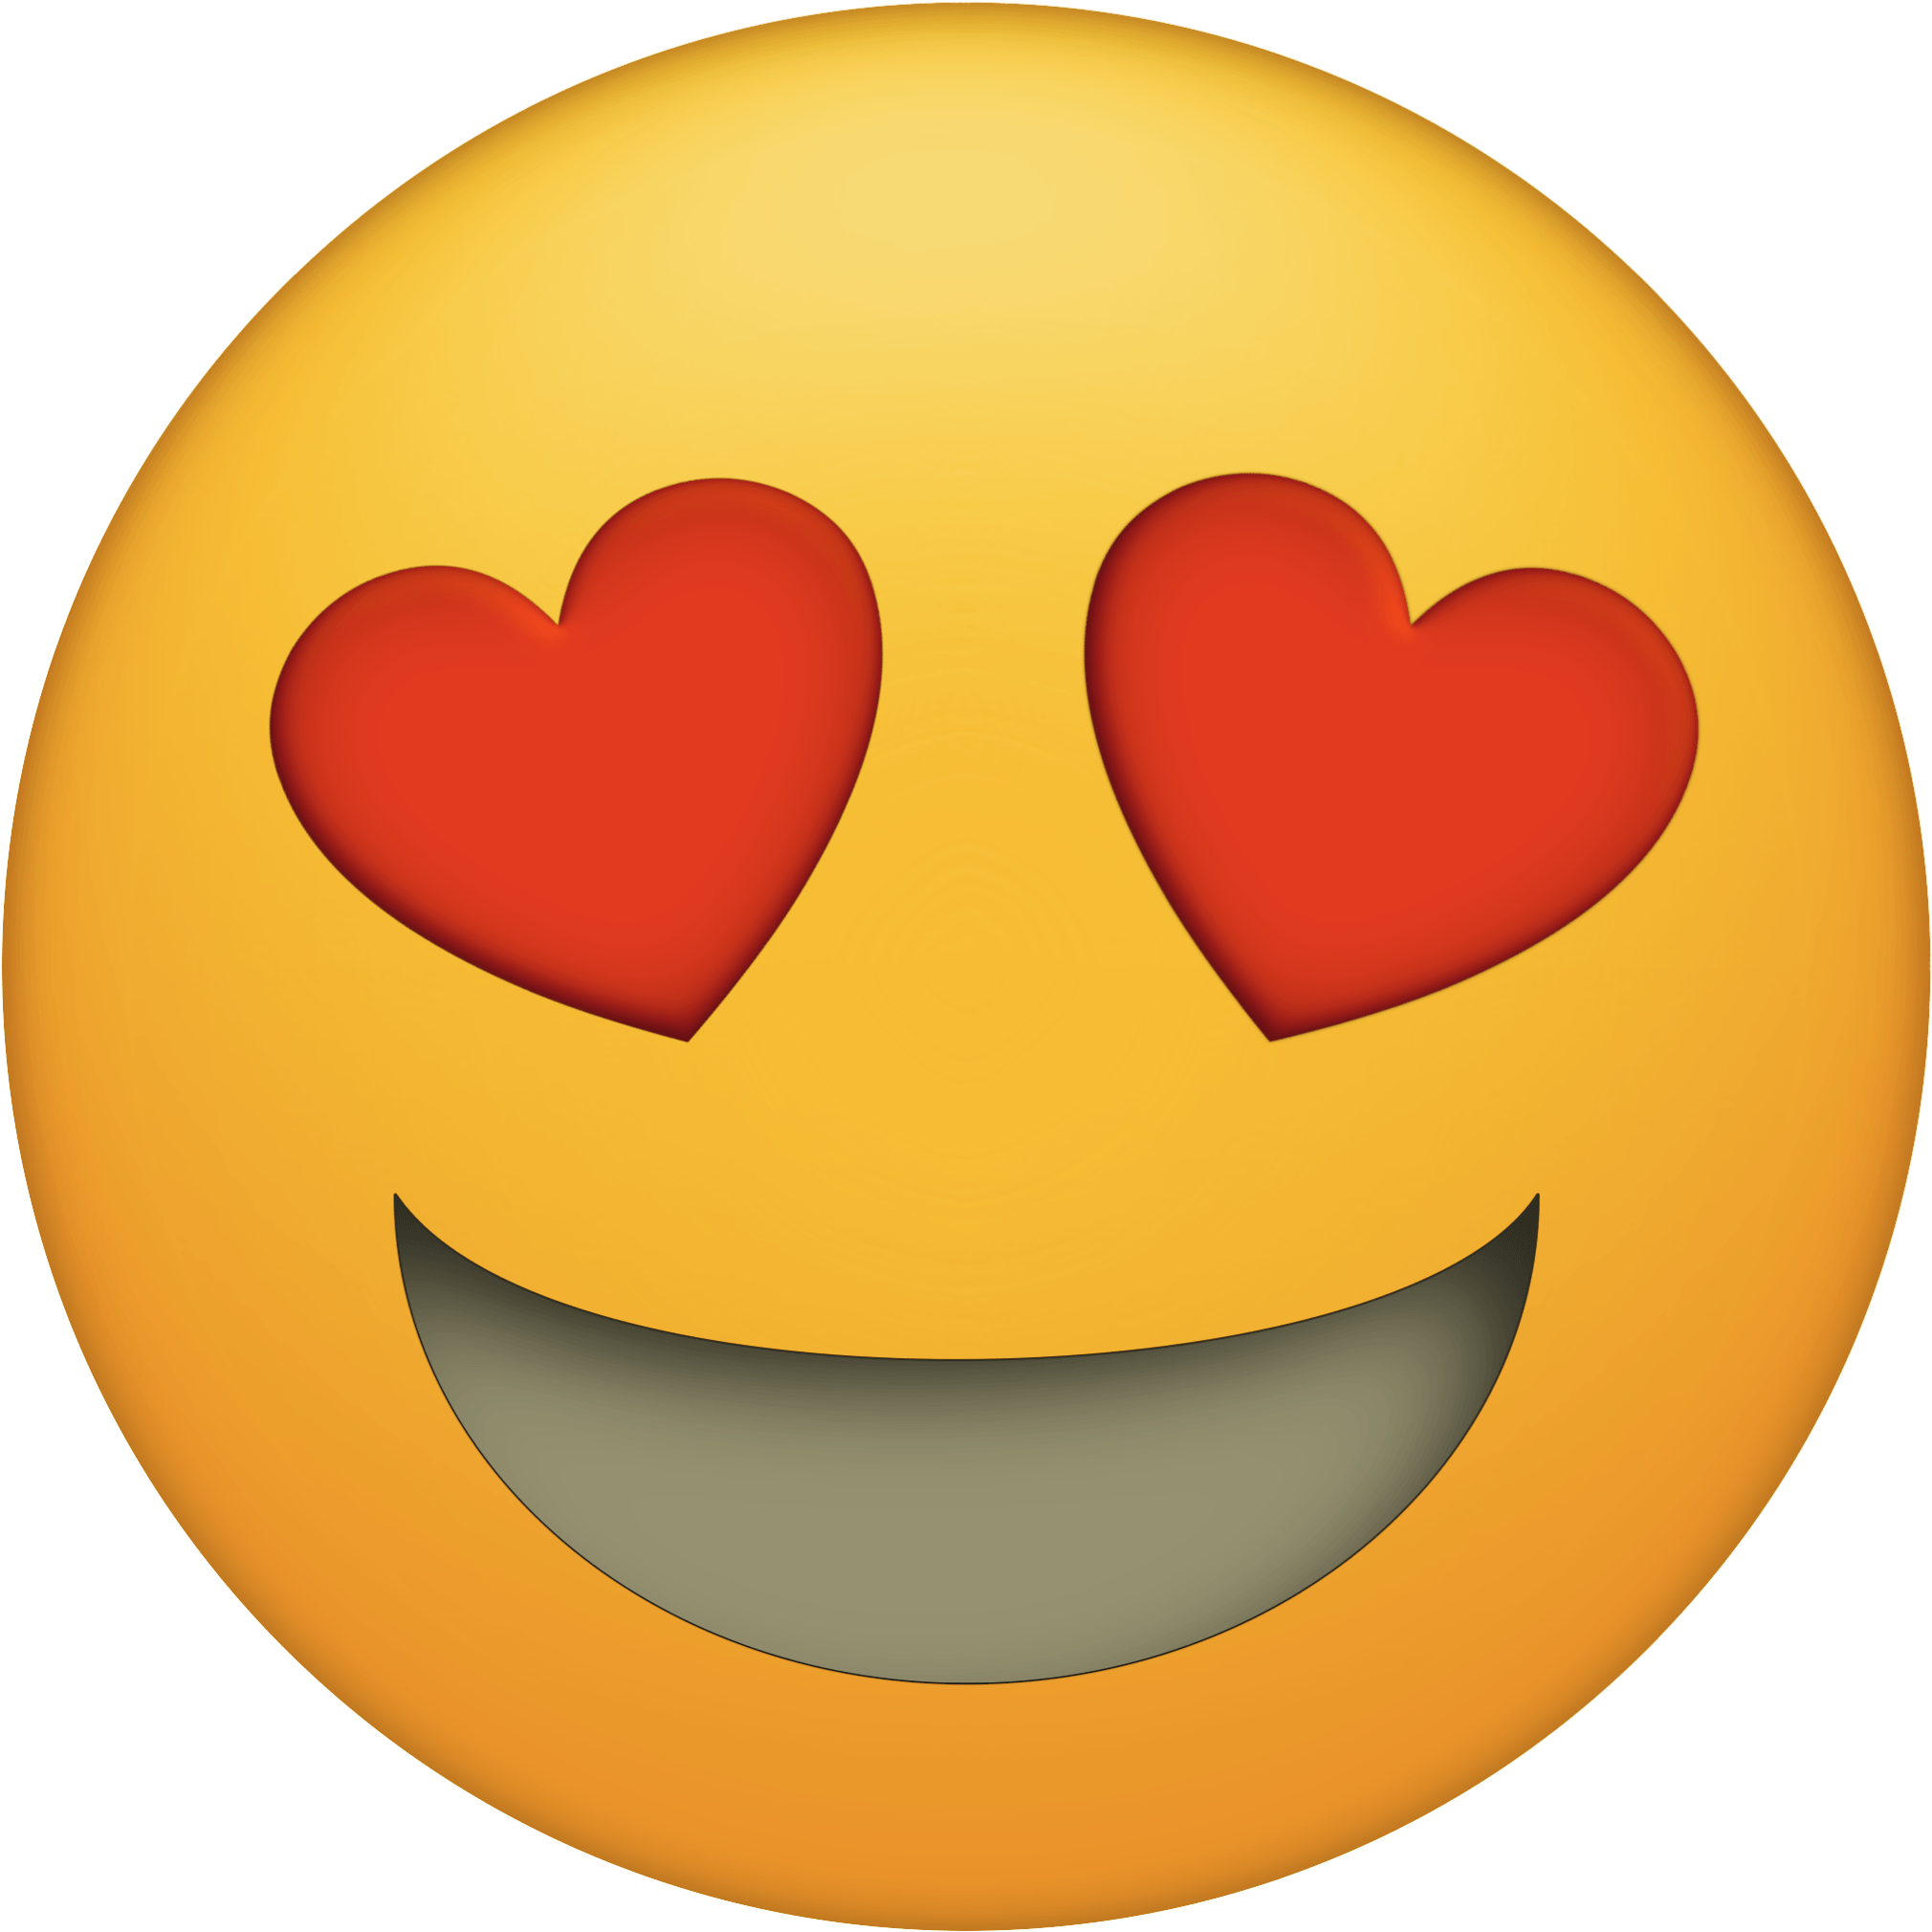 Heart-eyes 2,083×2,083 Pixels - Emoji With Heart Eyes (2083x2083)